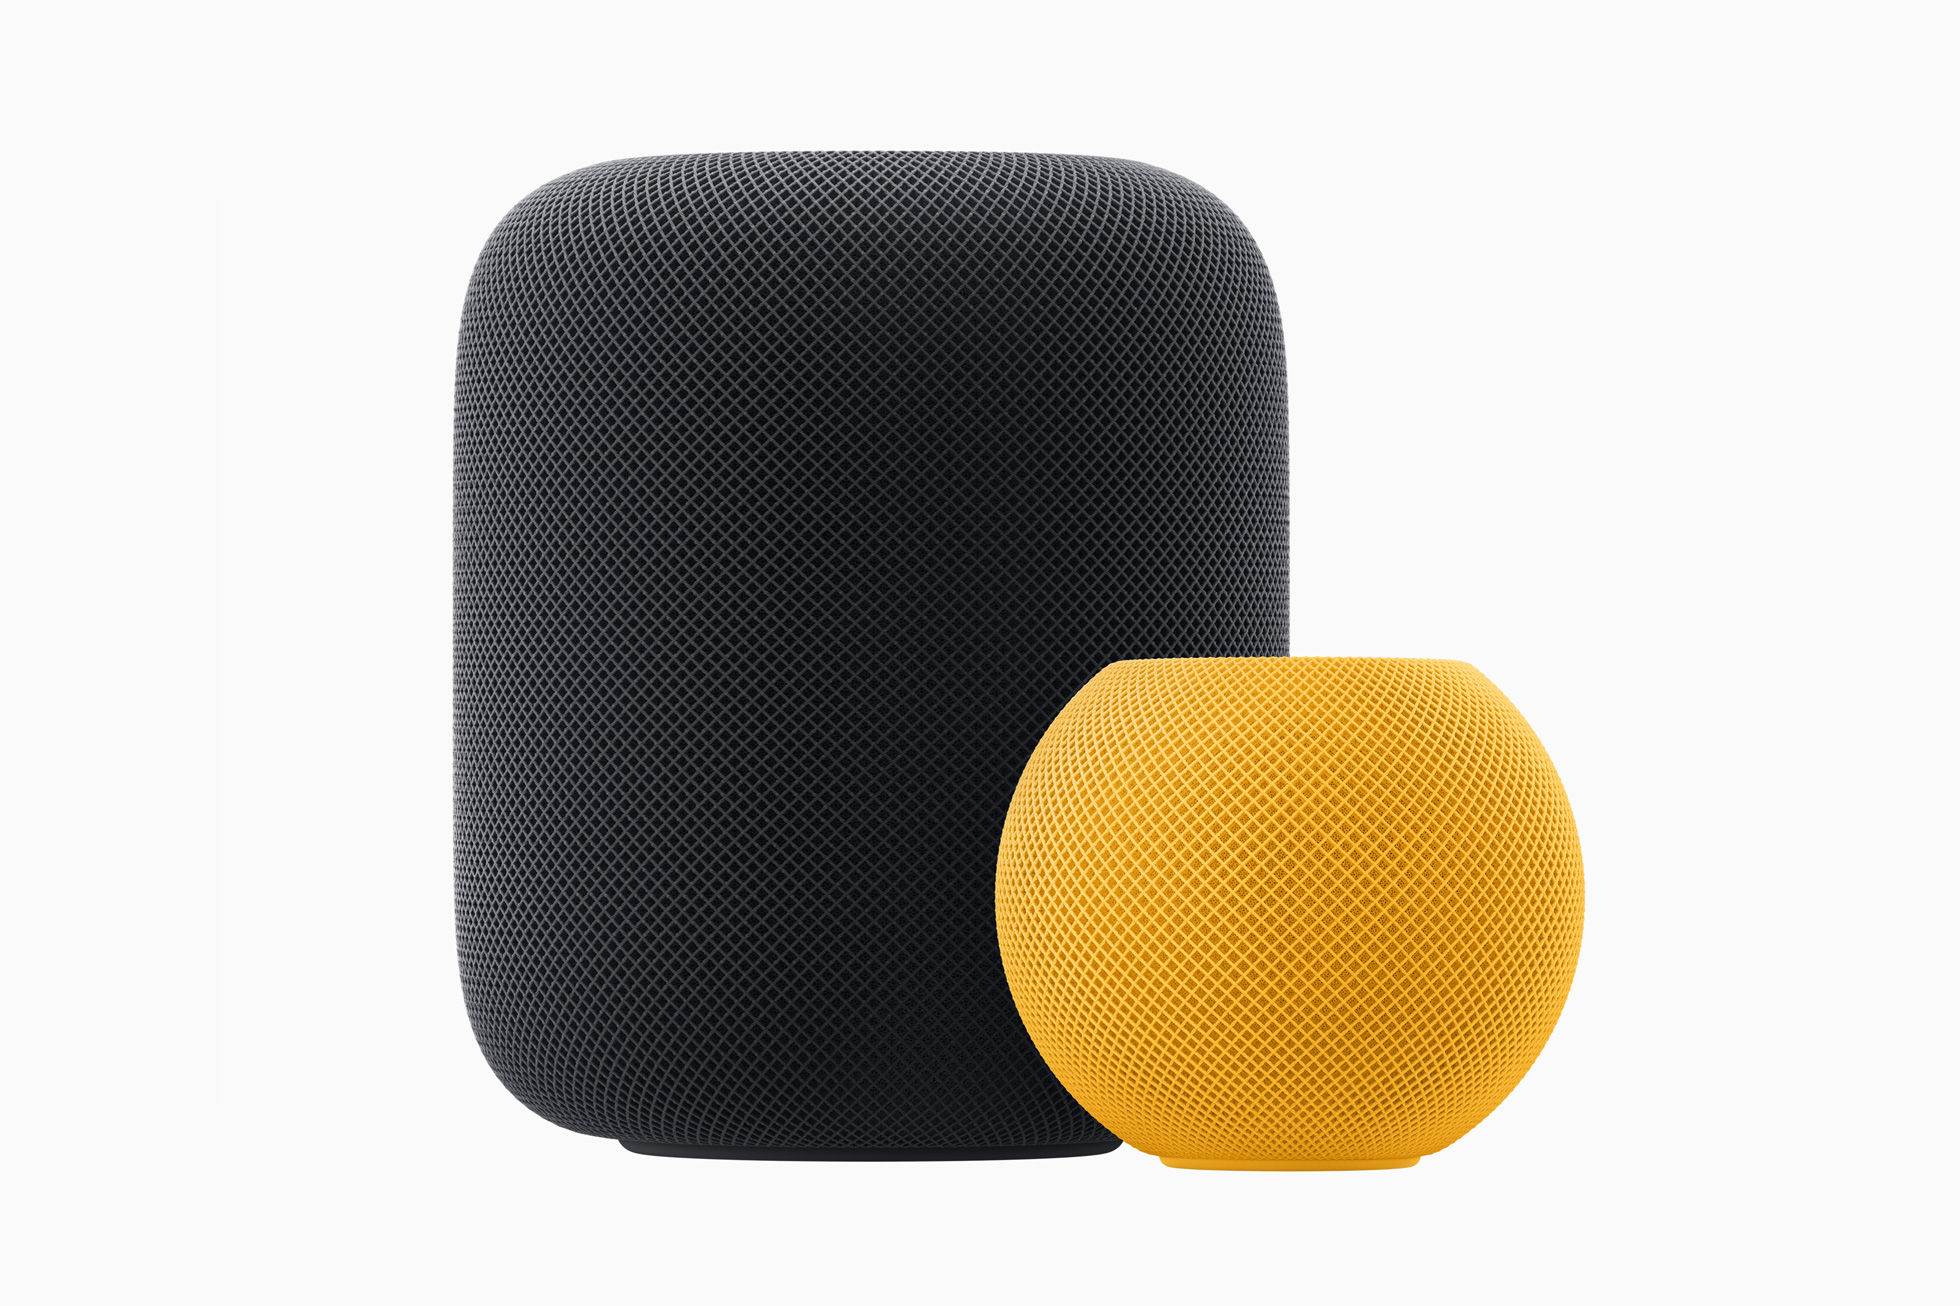 Apple's HomePod Is a Good Smart Speaker. But the Mini Is Better